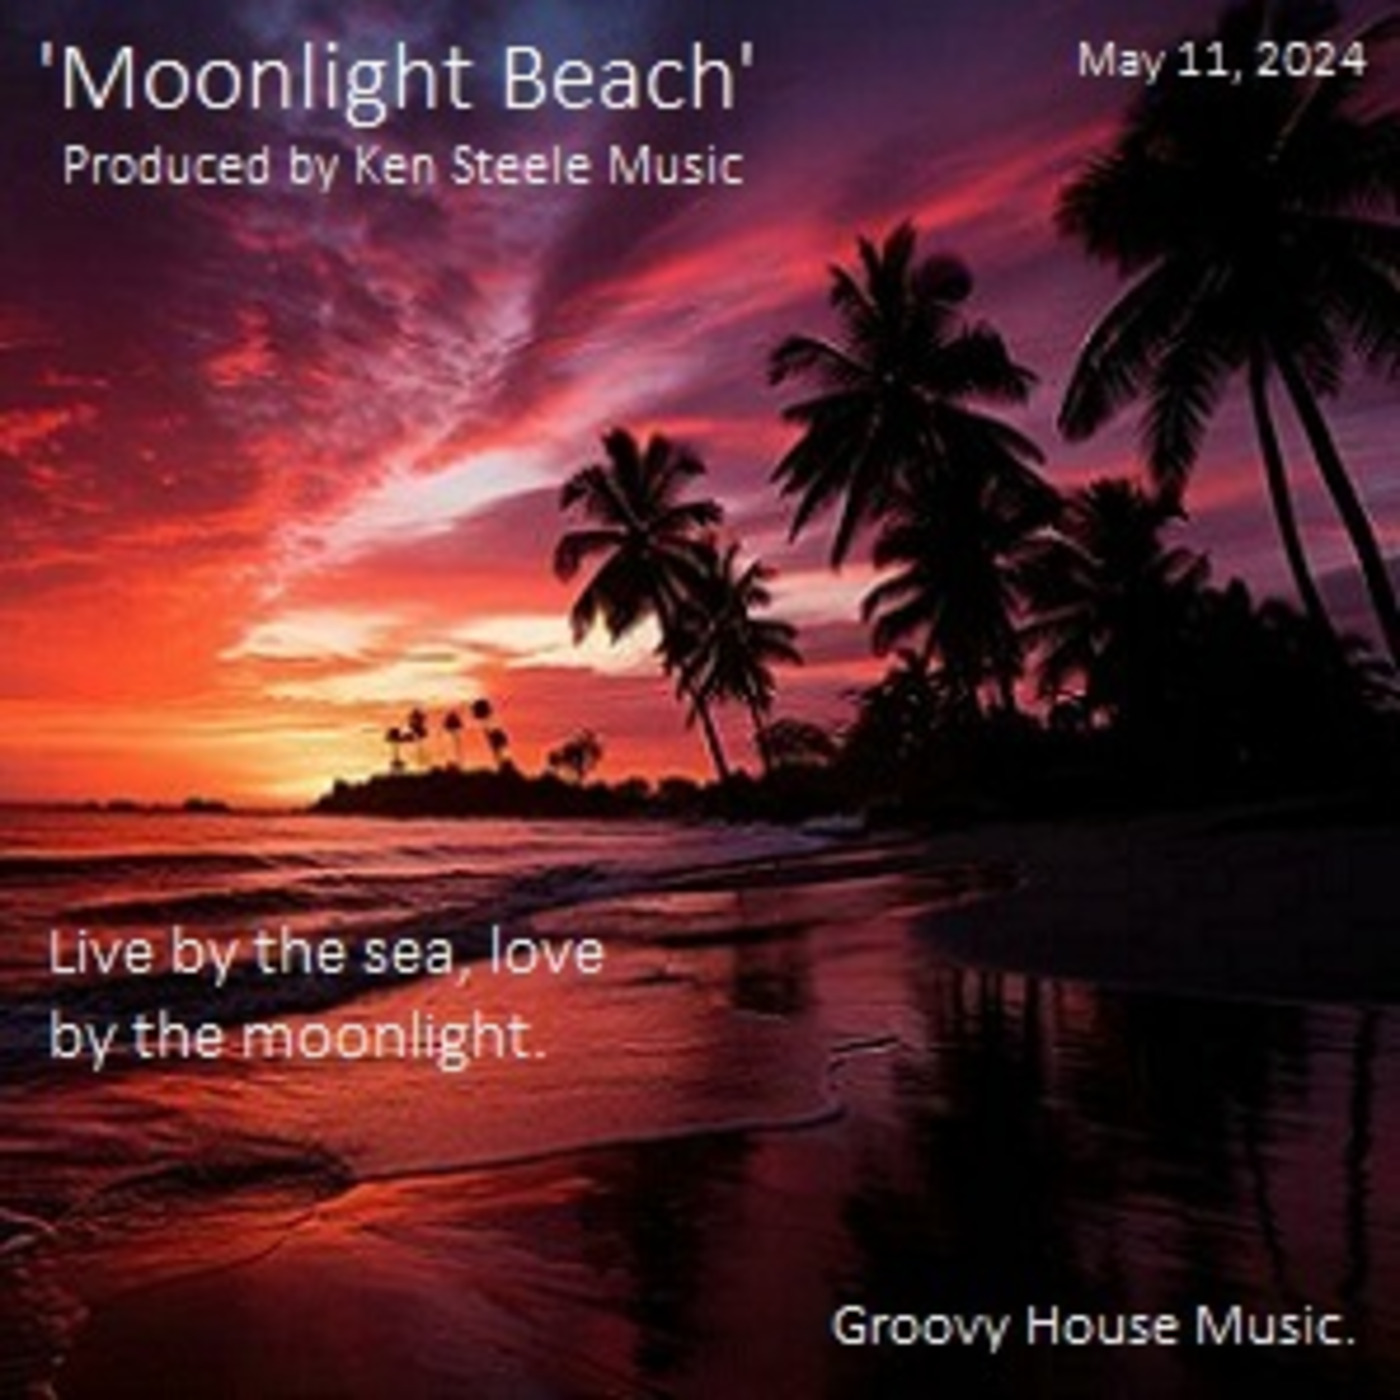 Episode 1280: Moonlight Beach (New Groovy House Music)